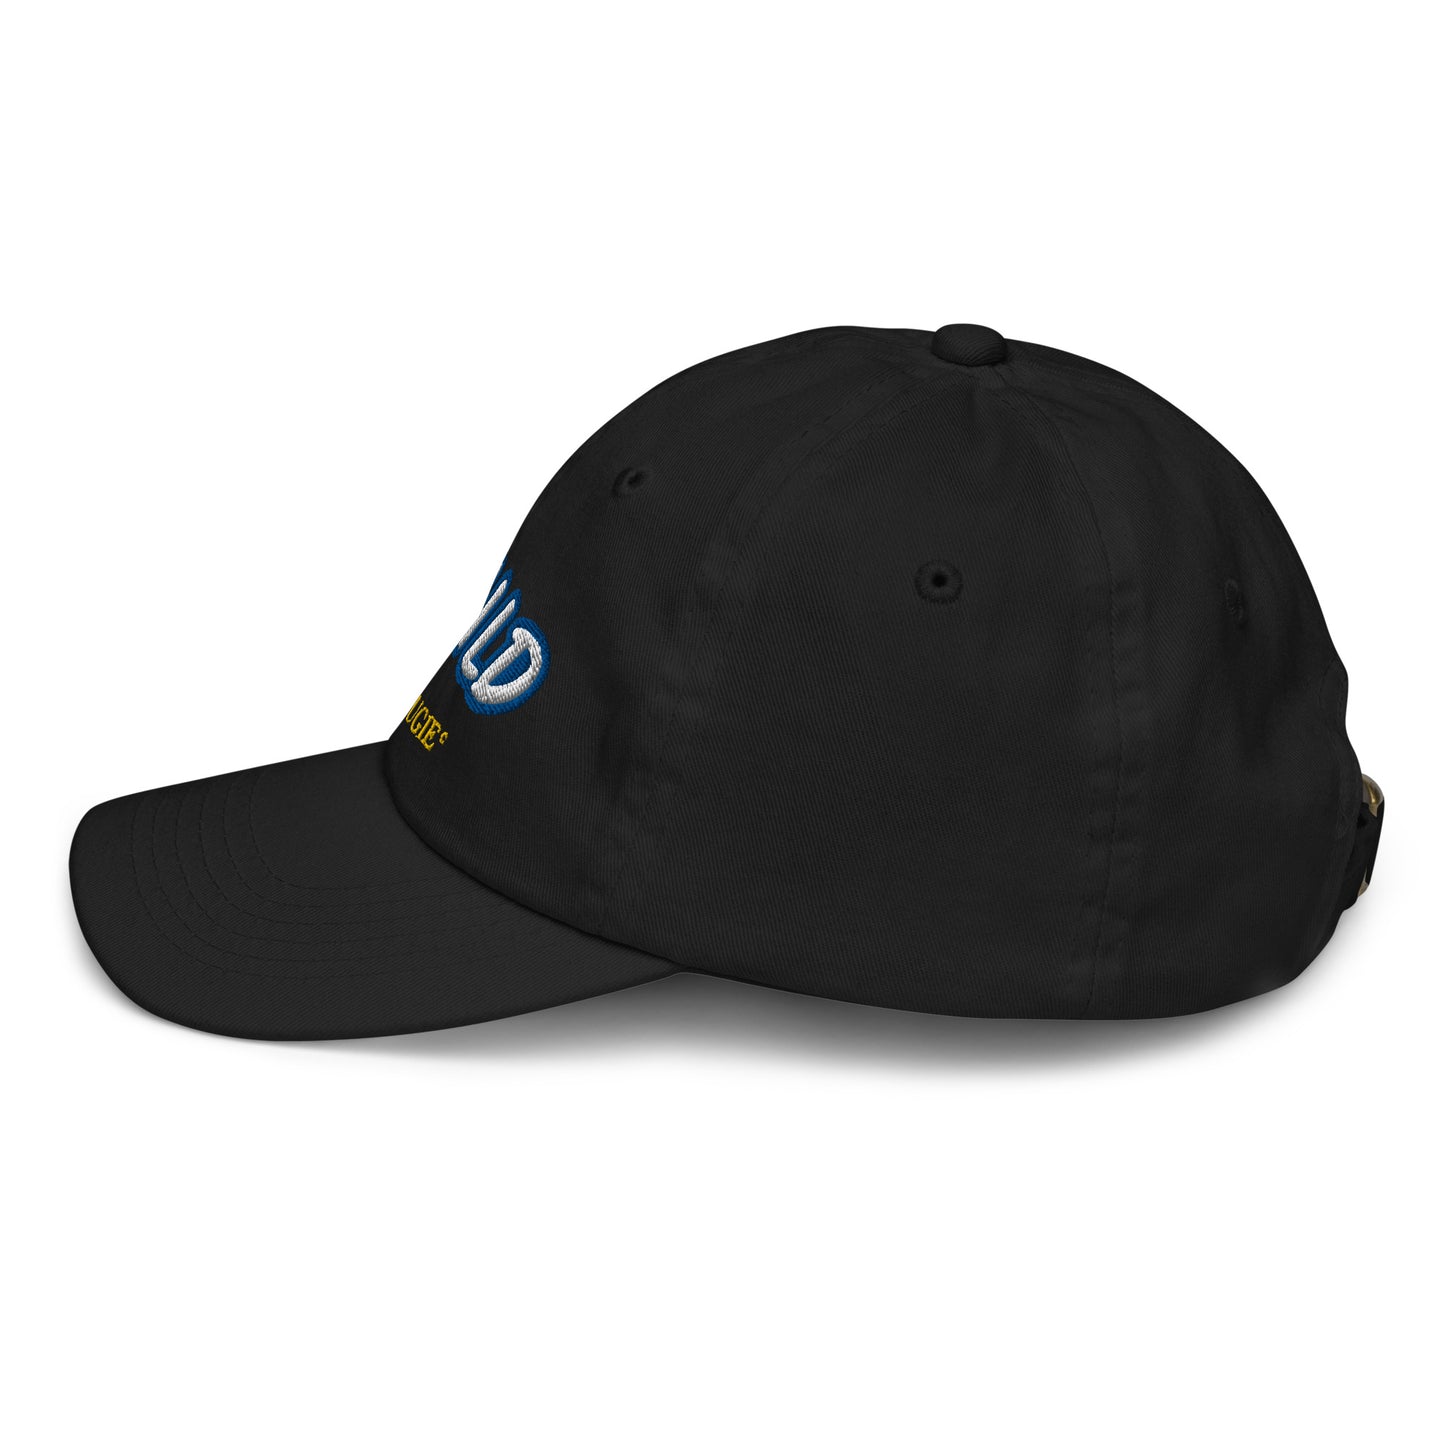 Idlewild Youth baseball cap